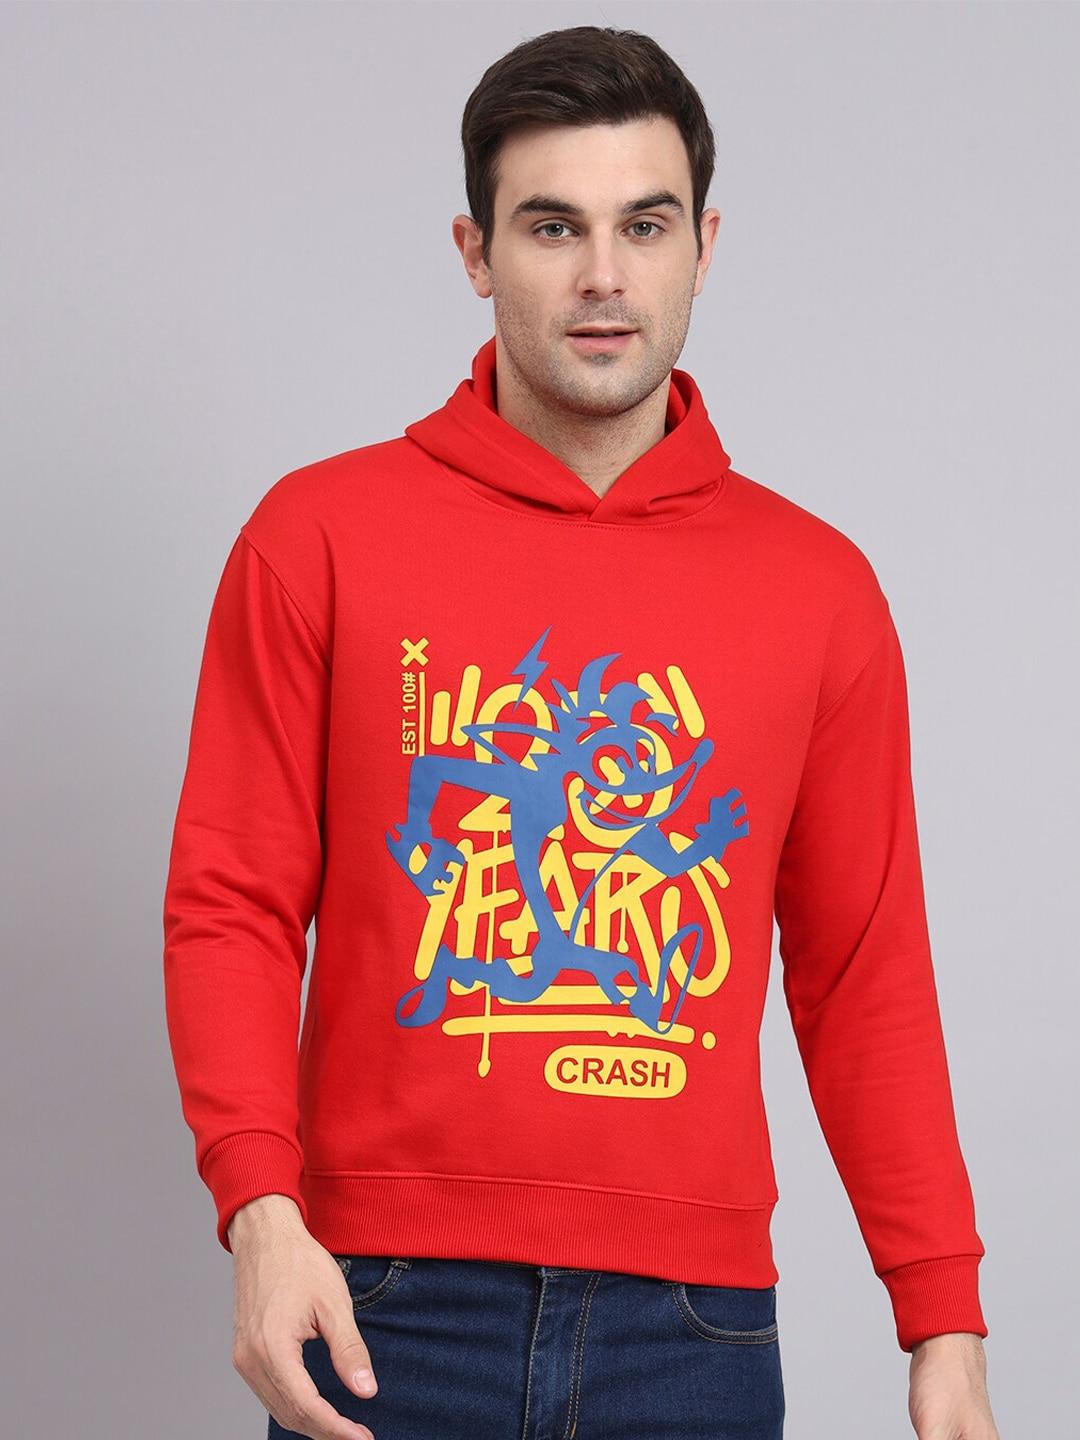 obaan graphic printed hooded cotton pullover sweatshirt